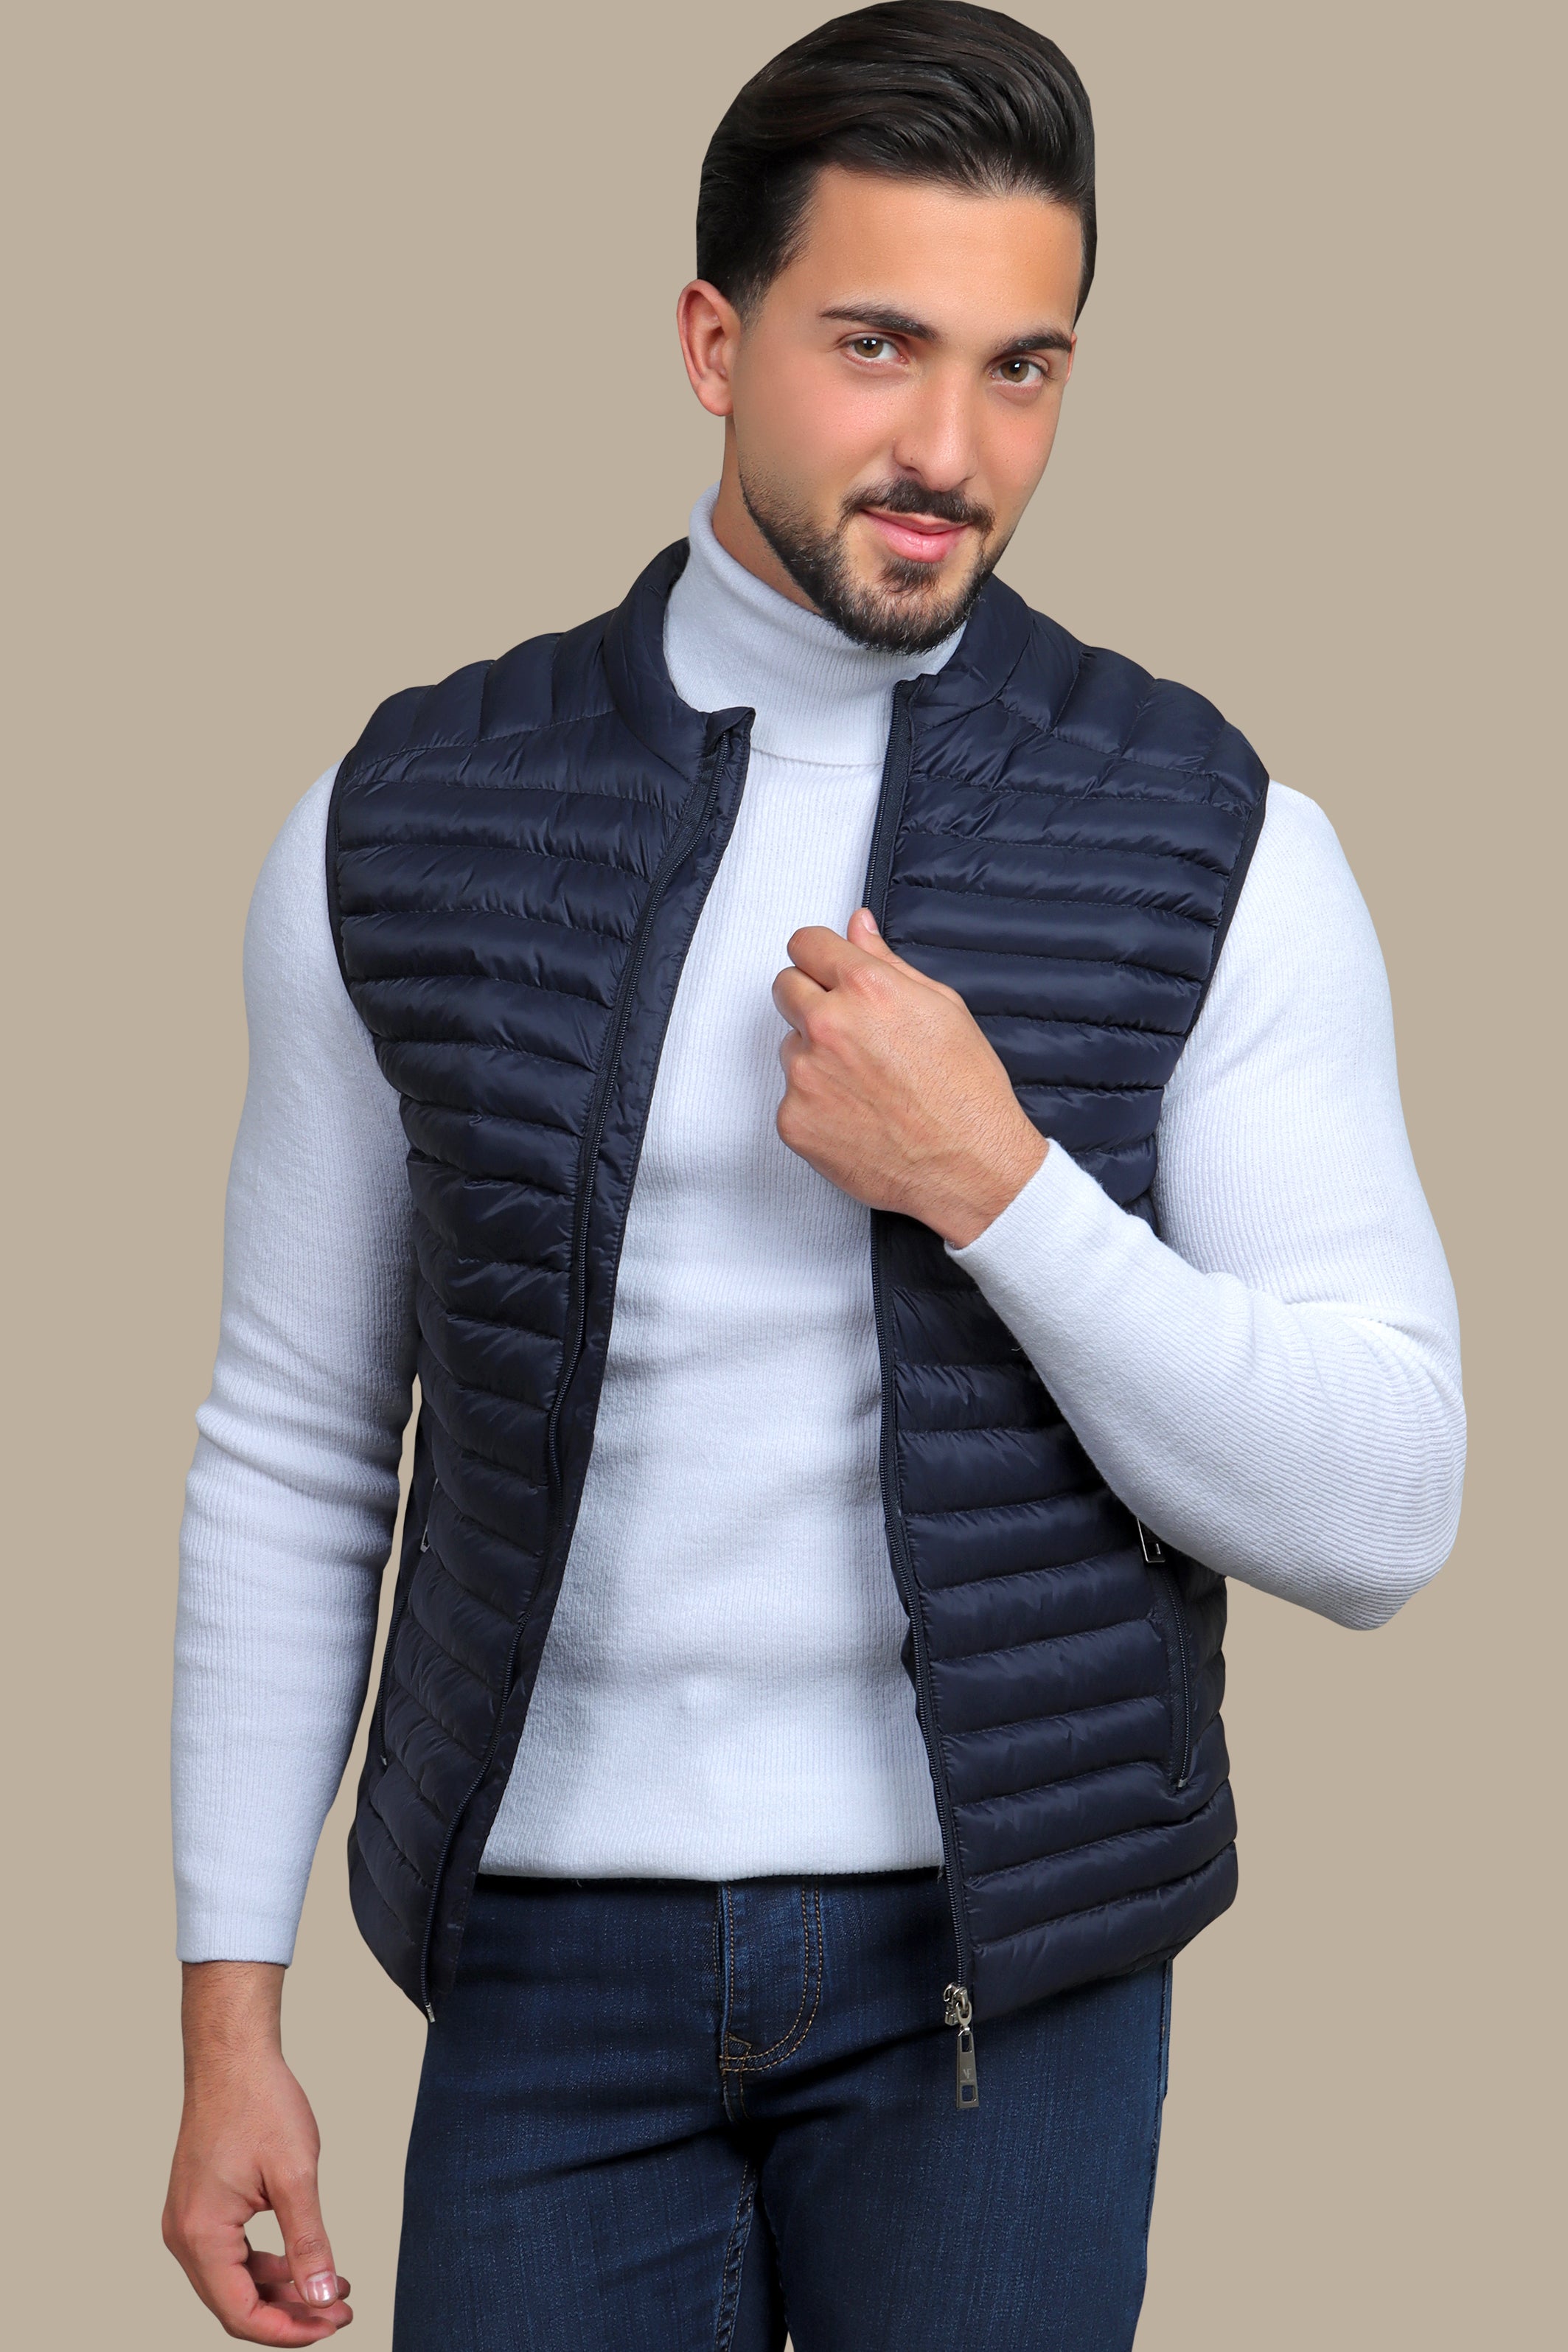 Midnight Luxe: Navy Padded Puffer Vest for Sleek Comfort